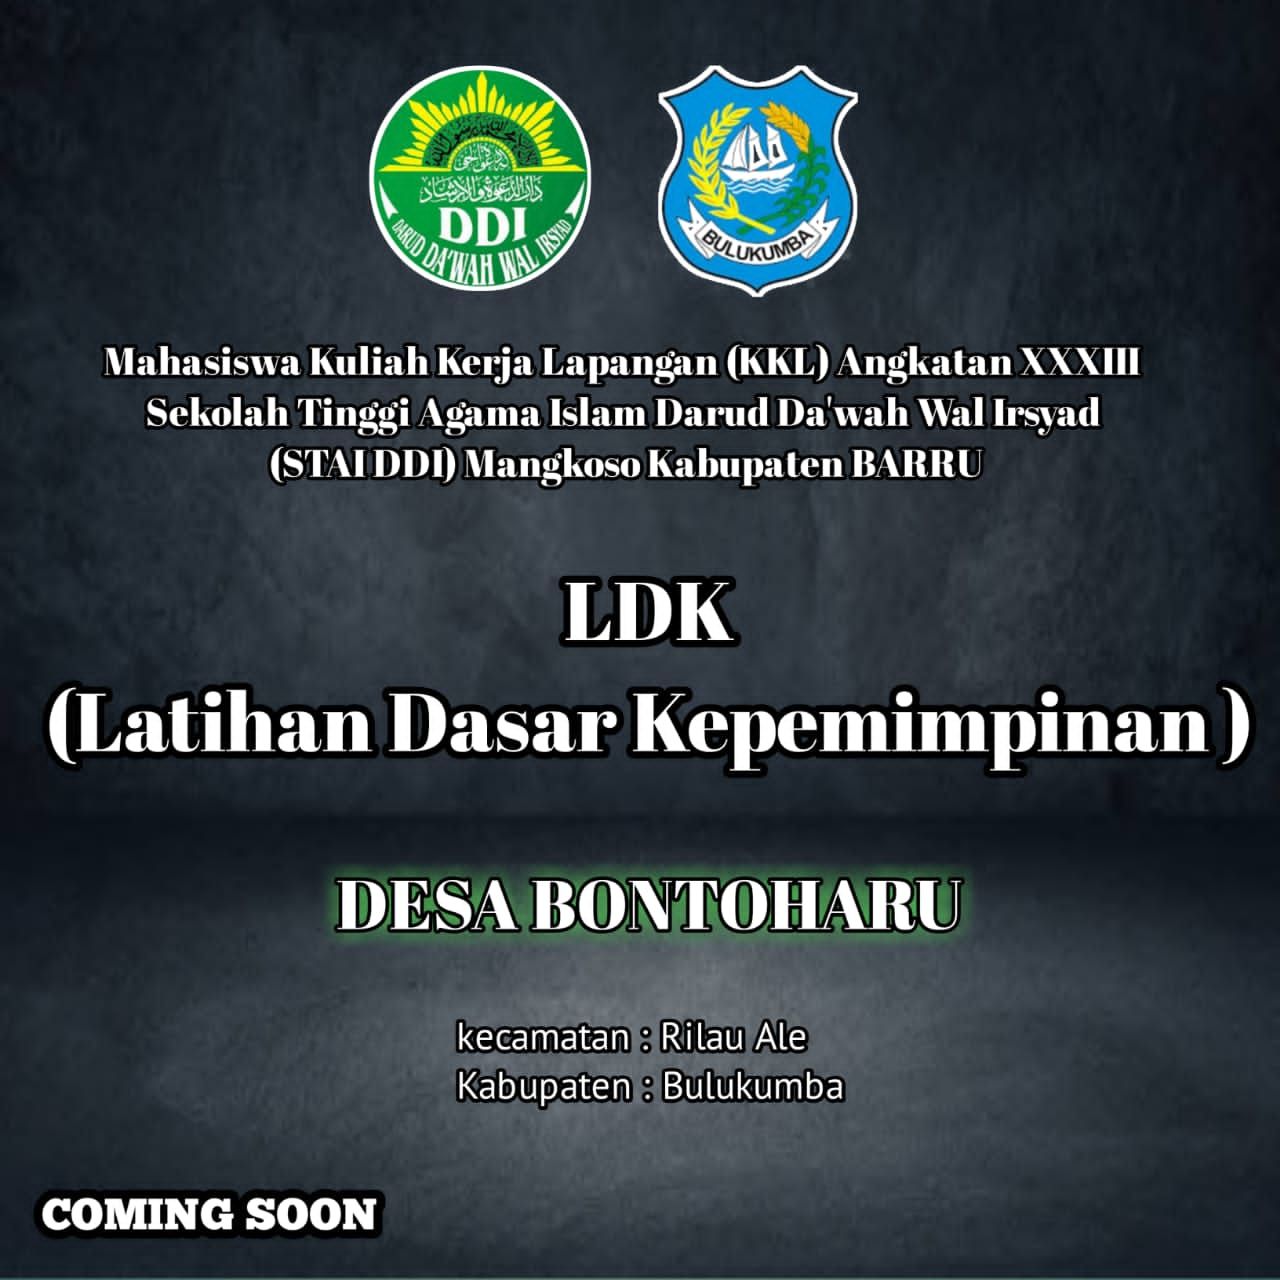 Sebaran pamflet proker LDK Desa Bontoharu Kecamatan Rilau Ale Kabupaten Bulukumba.*